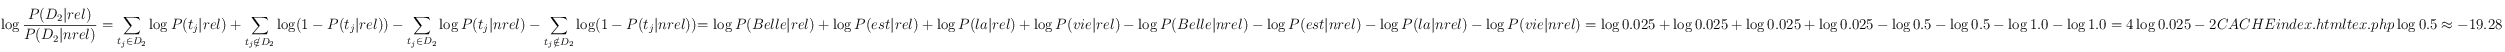 \log \frac{P(D_2|rel)}{P(D_2|nrel)} =
 \sum_{t_j\in D_2} \log  P(t_j|rel)+ \sum_{t_j\notin D_2} \log (1-P(t_j|rel)) - \sum_{t_j\in D_2} \log  P(t_j|nrel) - \sum_{t_j\notin D_2} \log (1-P(t_j|nrel))

= \log  P(Belle |rel) + \log  P(est |rel) + \log  P(la|rel) + \log  P(vie|rel)
-\log  P(Belle |nrel) - \log  P(est |nrel) - \log  P(la|nrel) - \log  P(vie|nrel)
= \log  0.025 + \log  0.025+ \log  0.025+ \log  0.025
-\log  0.5 - \log  0.5  - \log  1.0 - \log  1.0
= 4 \log  0.025 - 2 * \log 0.5
\approx -19.28
